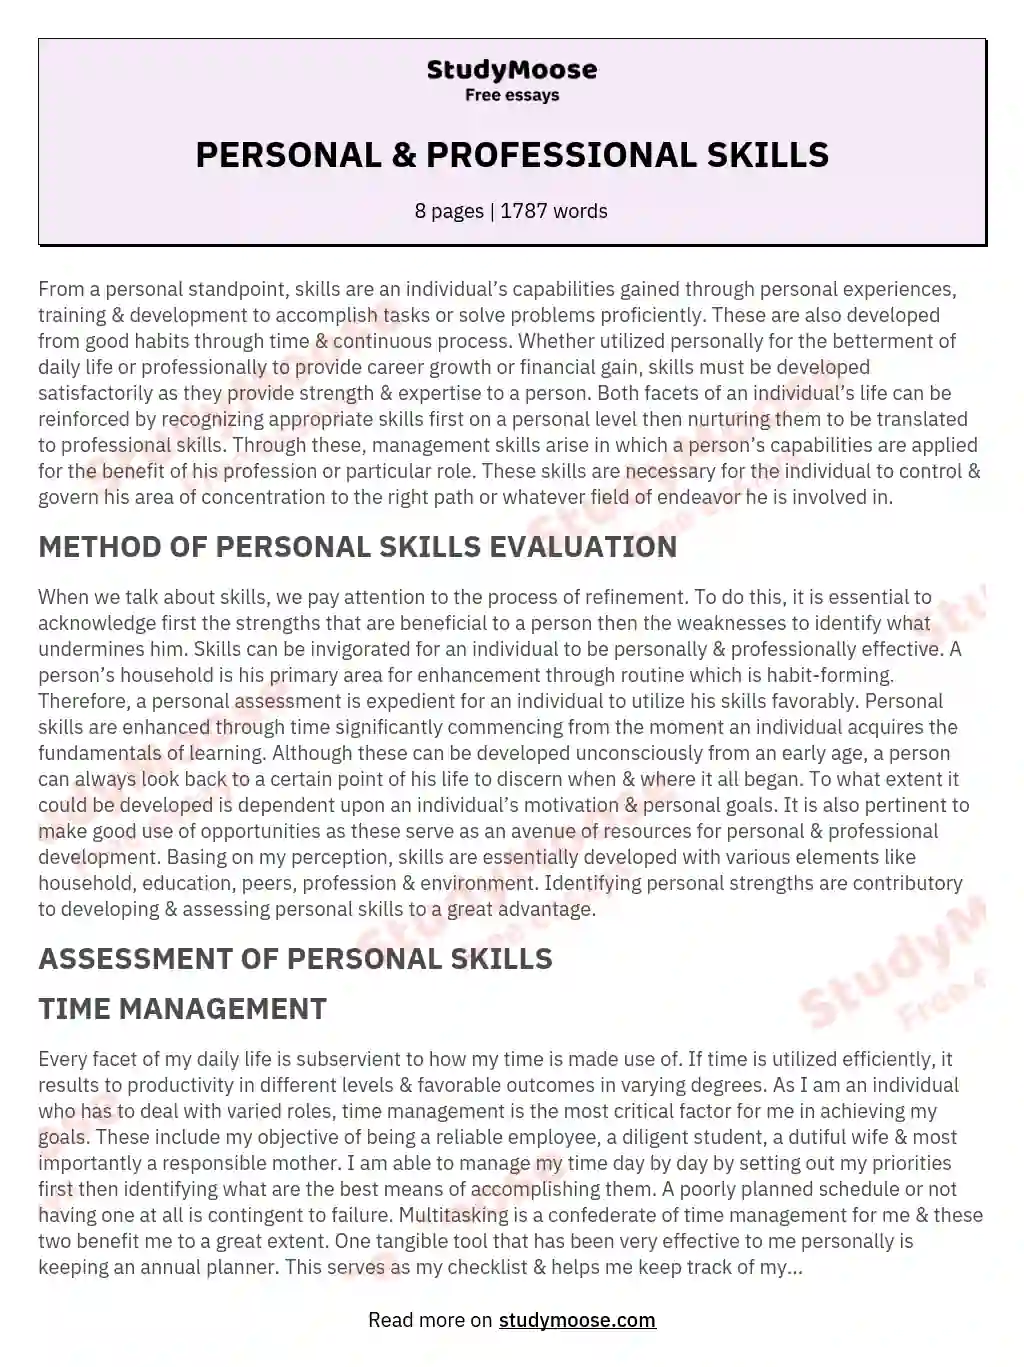 importance of professional skills essay